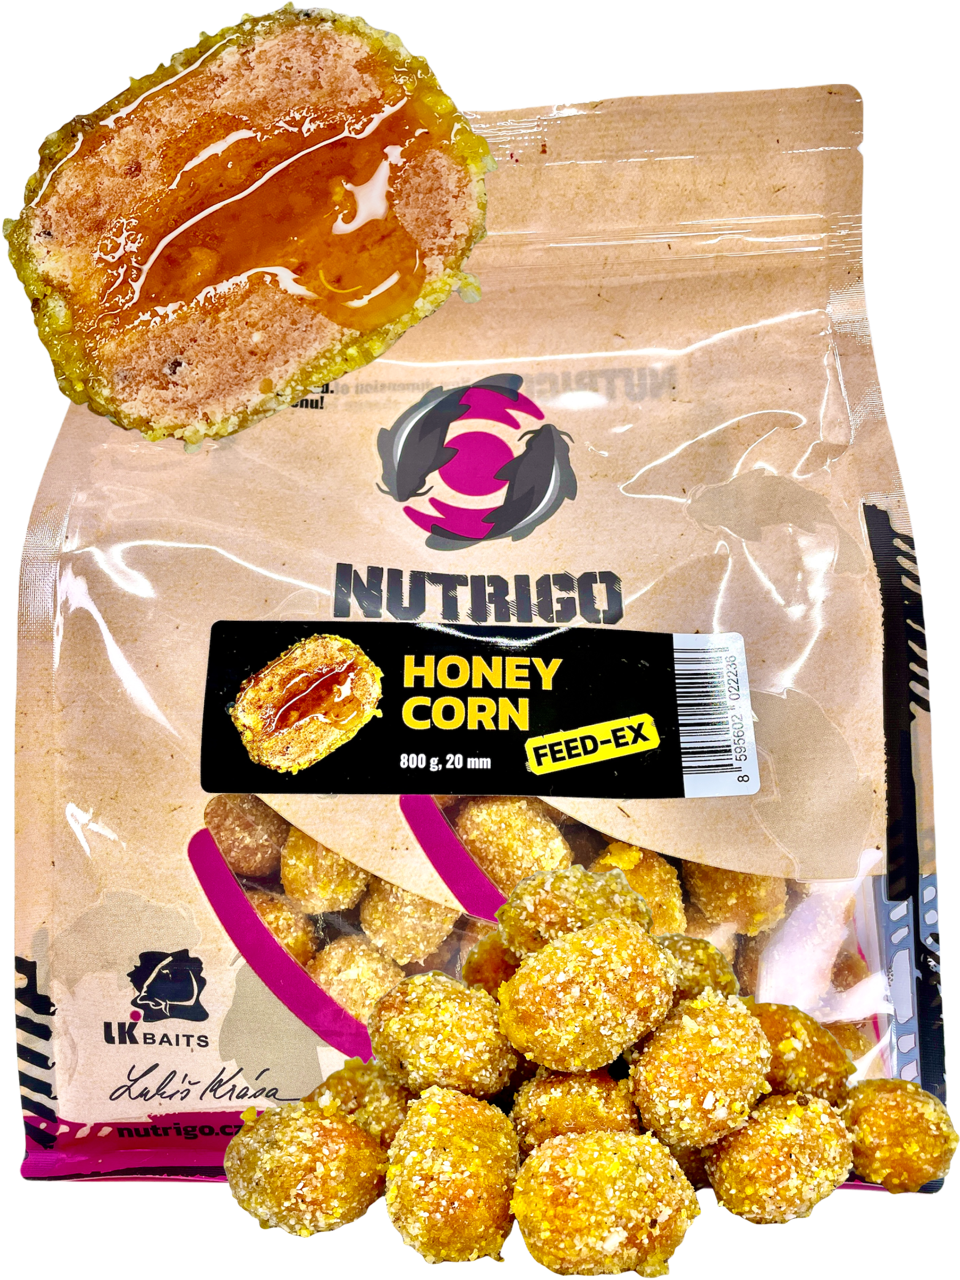 LK Baits Nutrigo FEED-EX Honey Corn 800g, 20 mm